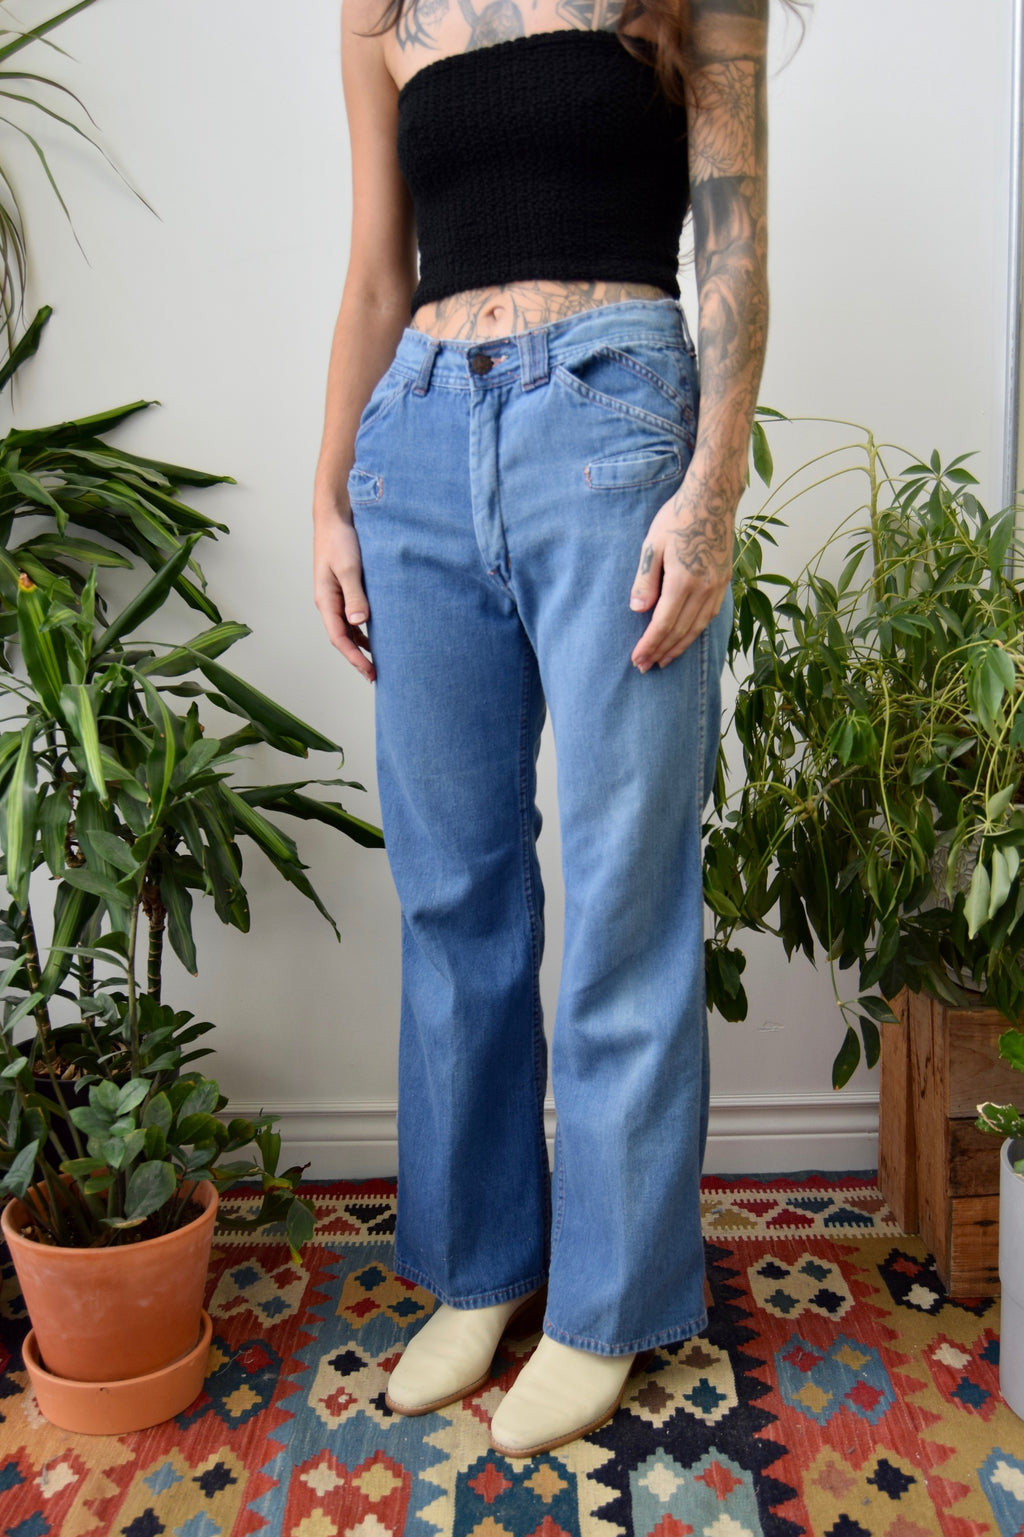 Seventies "Loose Change" Jeans